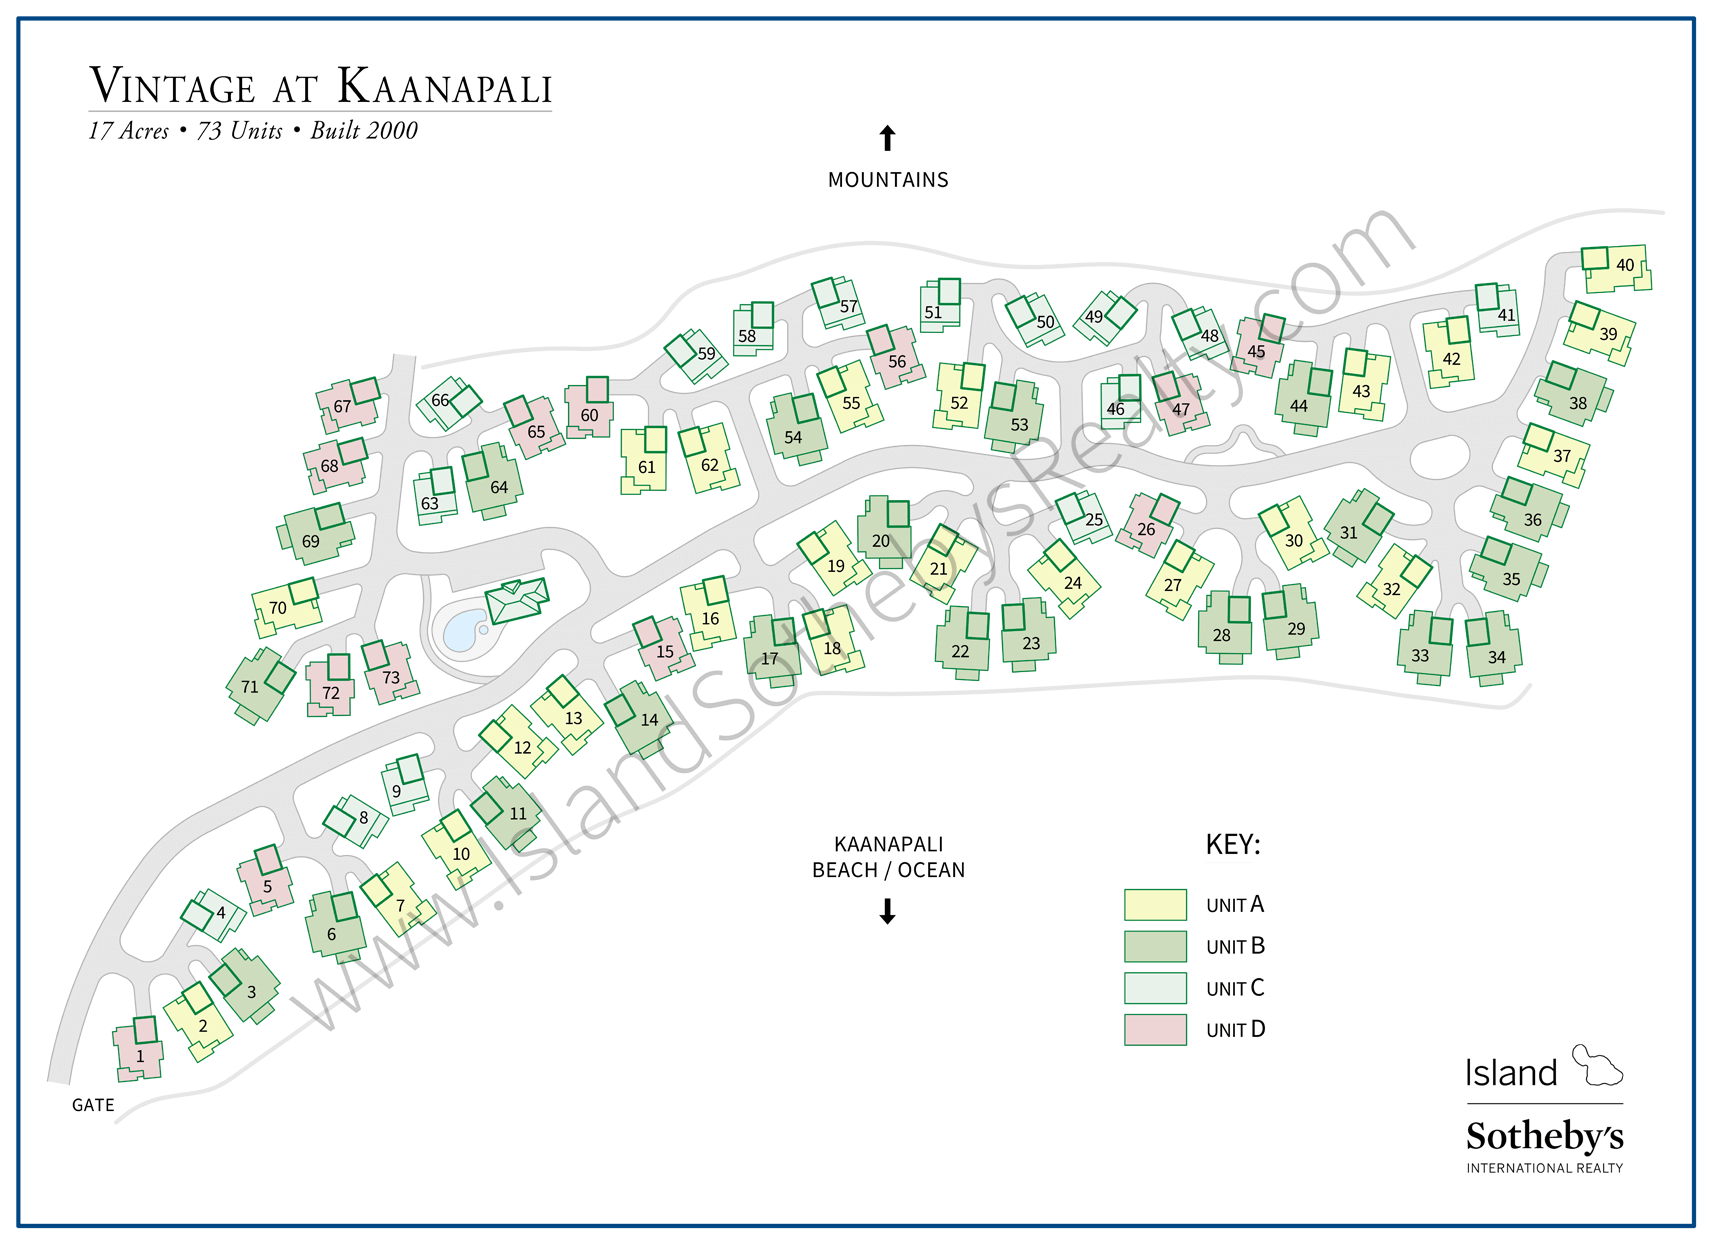 Map of the Vintage at Kaanapali